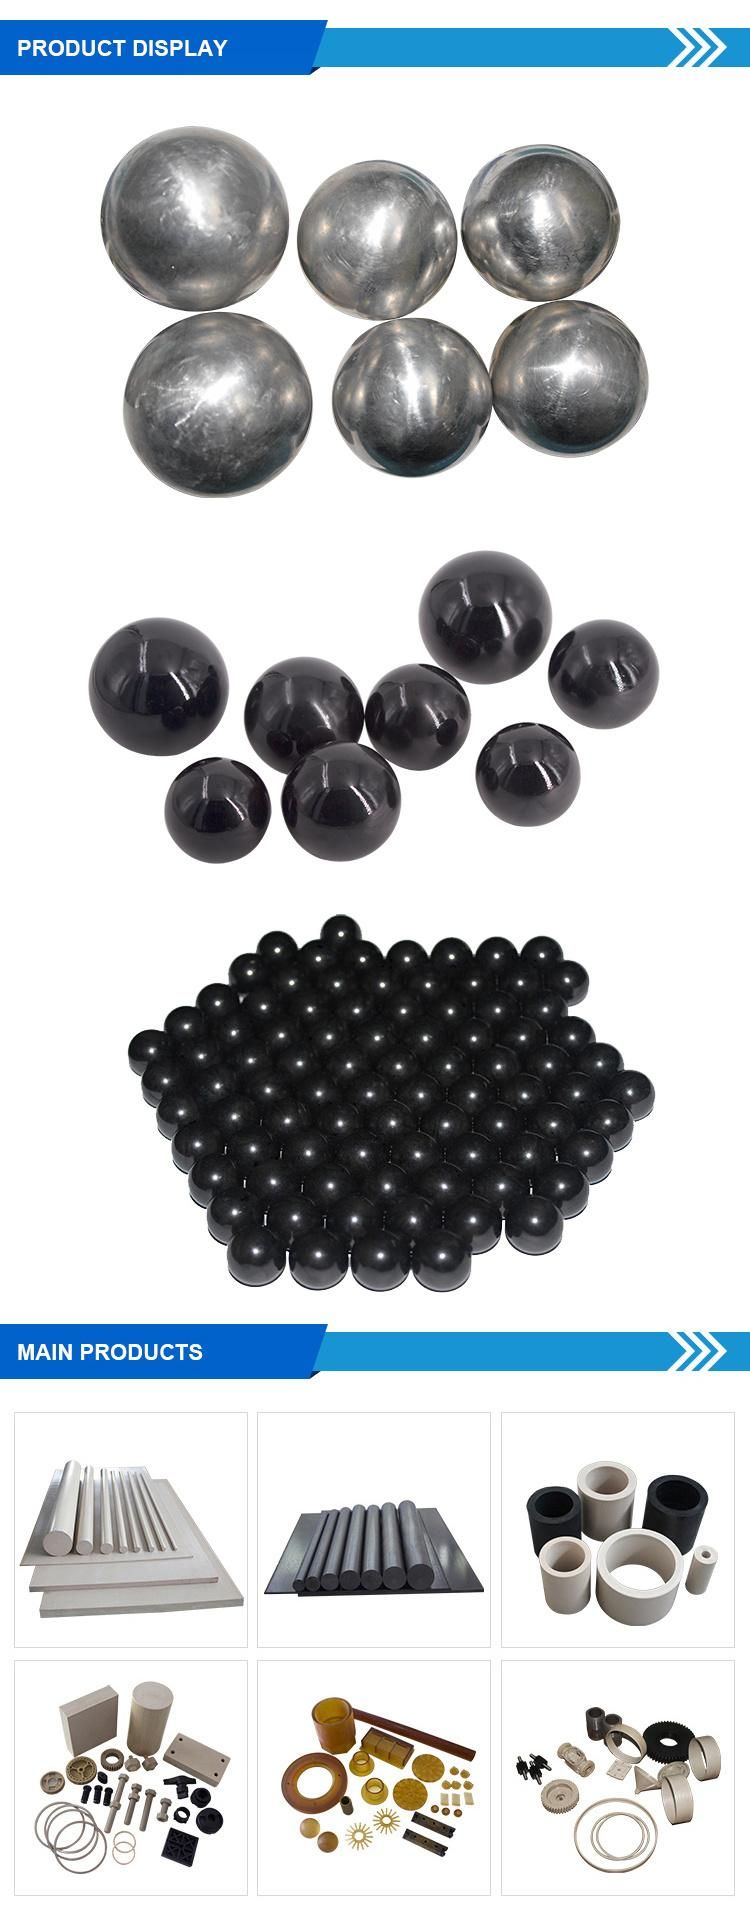 Customizable Dissolvable Frac Balls